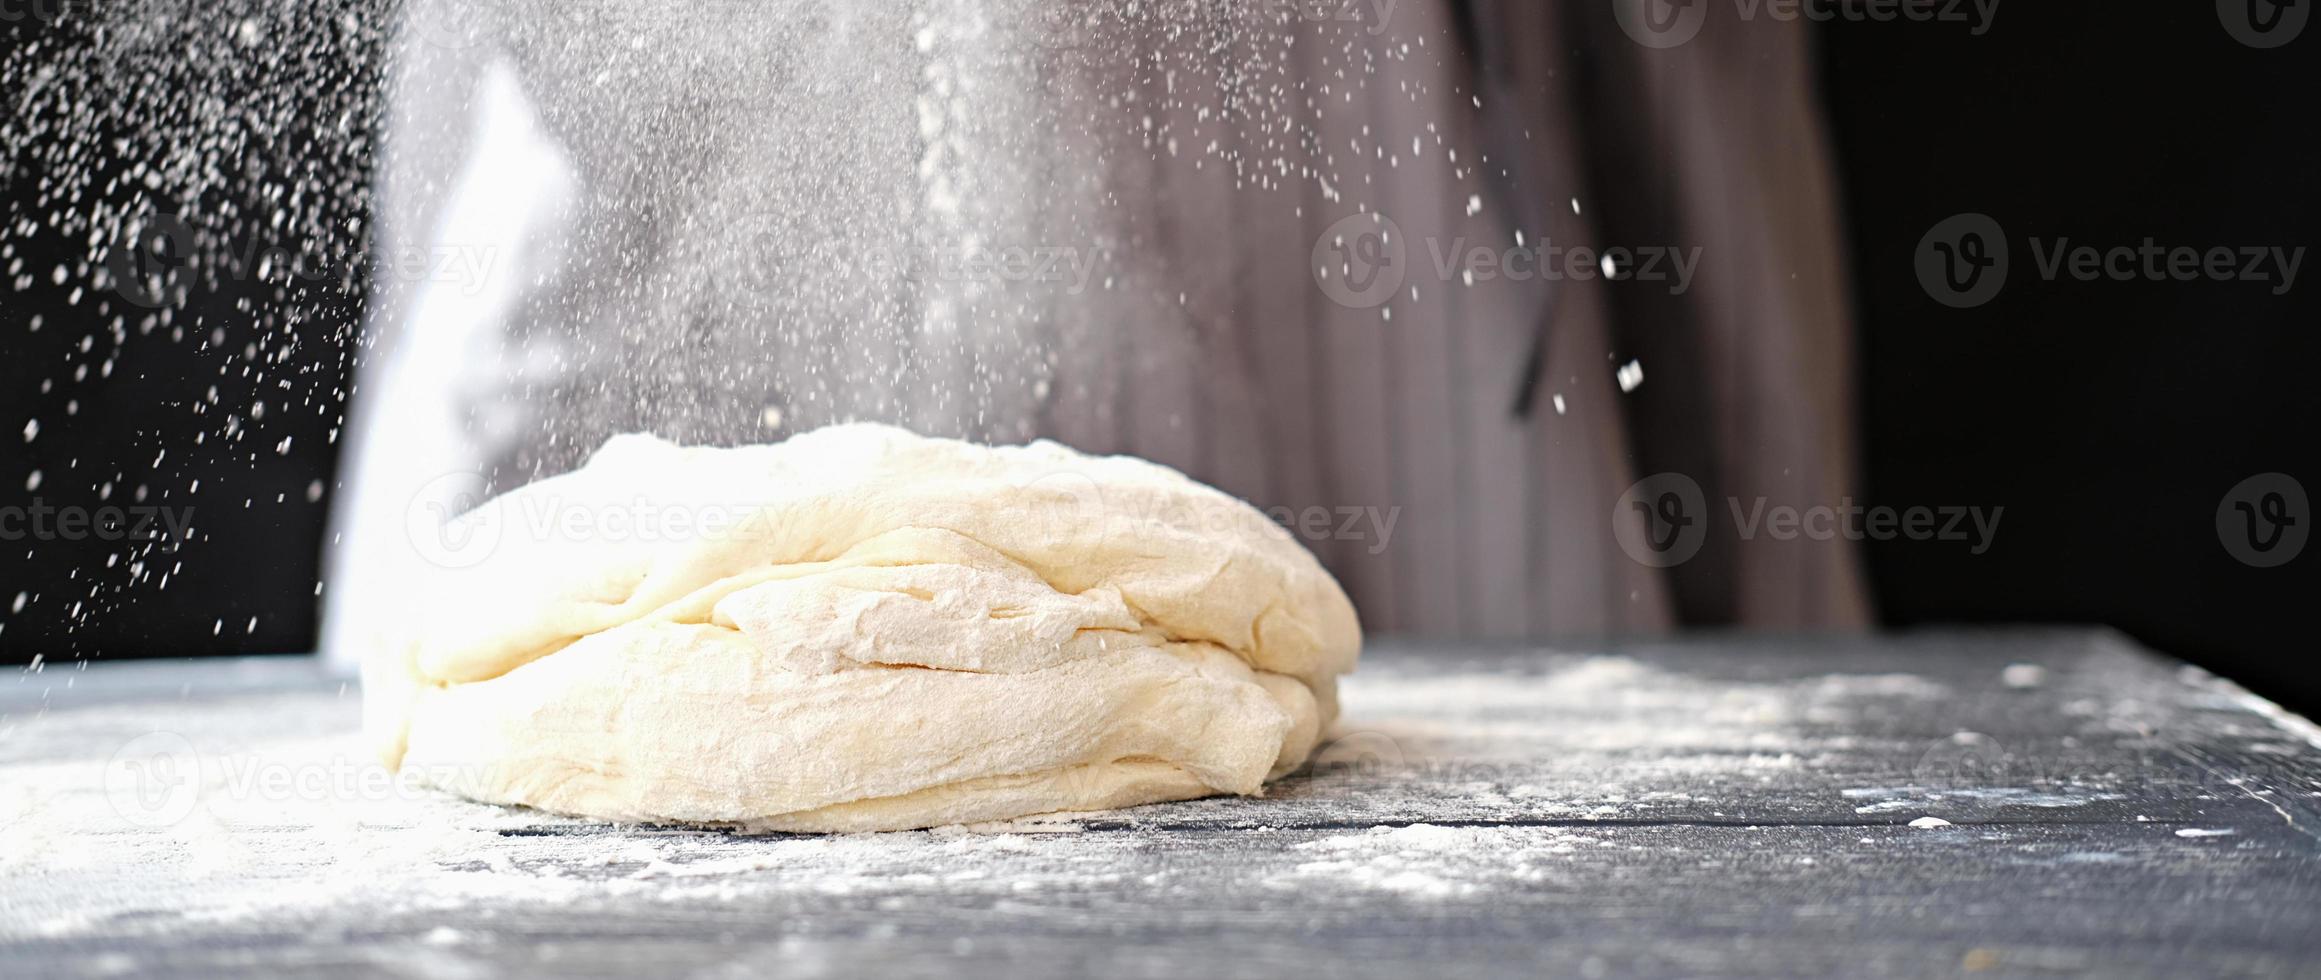 dough for bread or pizza photo